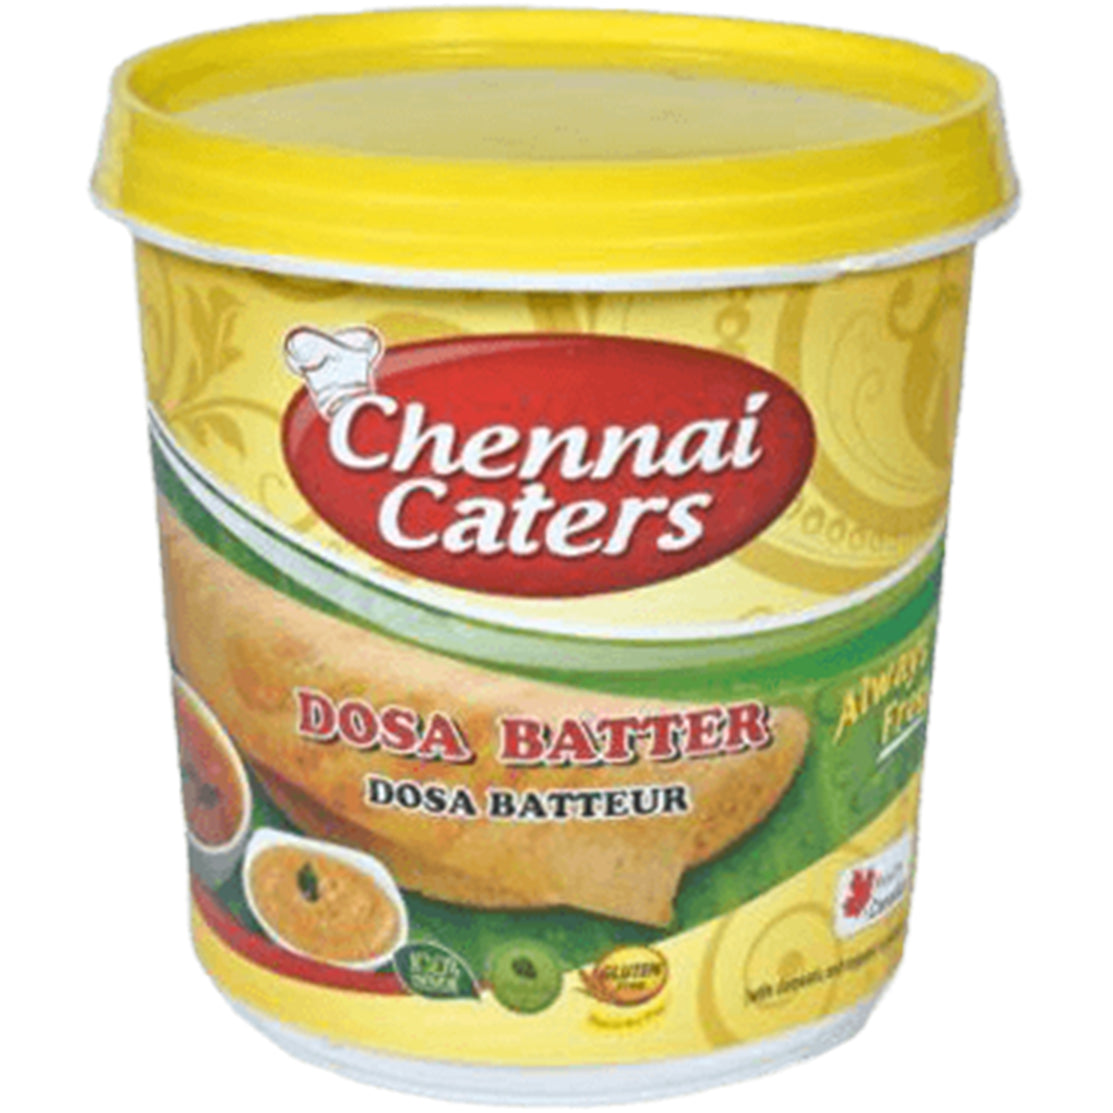 Chennai Caters Dosa Batter, 64 oz